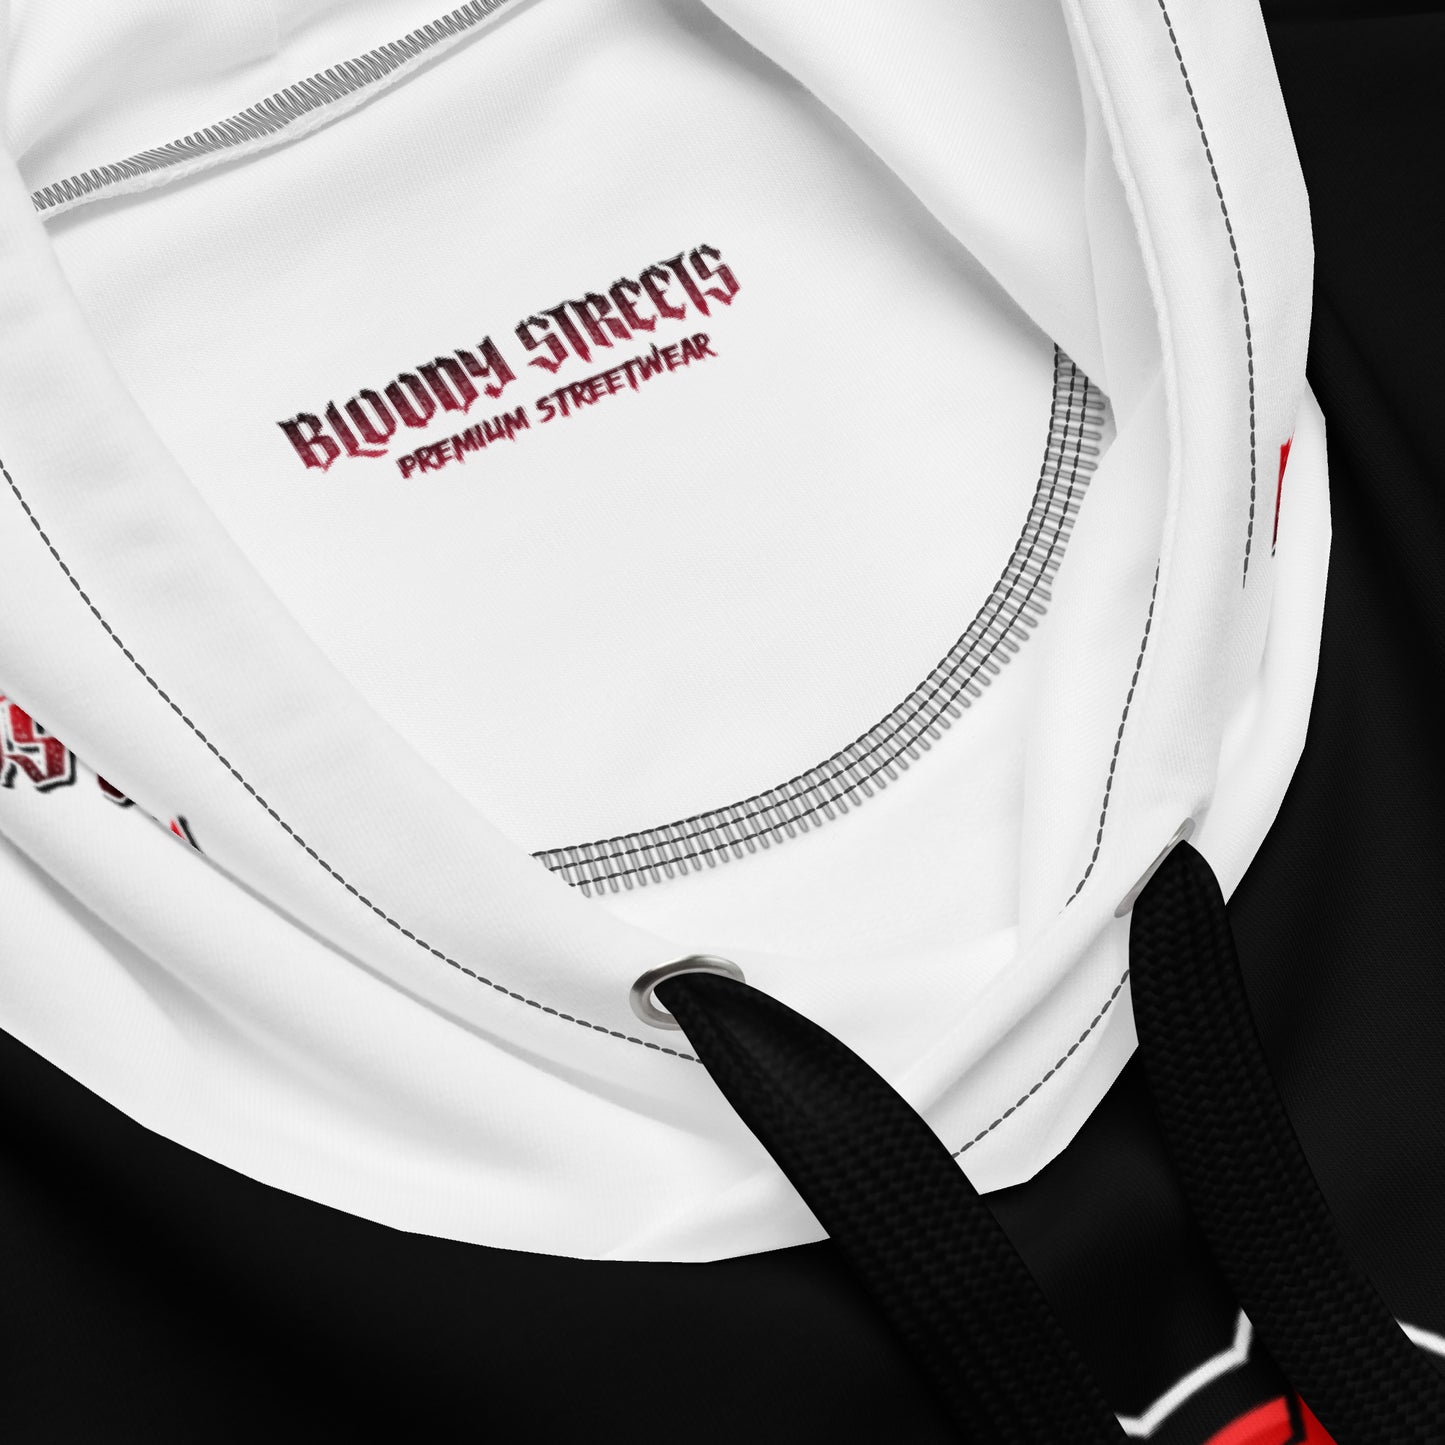 Bloody Streets Hockey Unisex Hoodie - BLOODY-STREETS.DE Streetwear Herren und Damen Hoodies, T-Shirts, Pullis